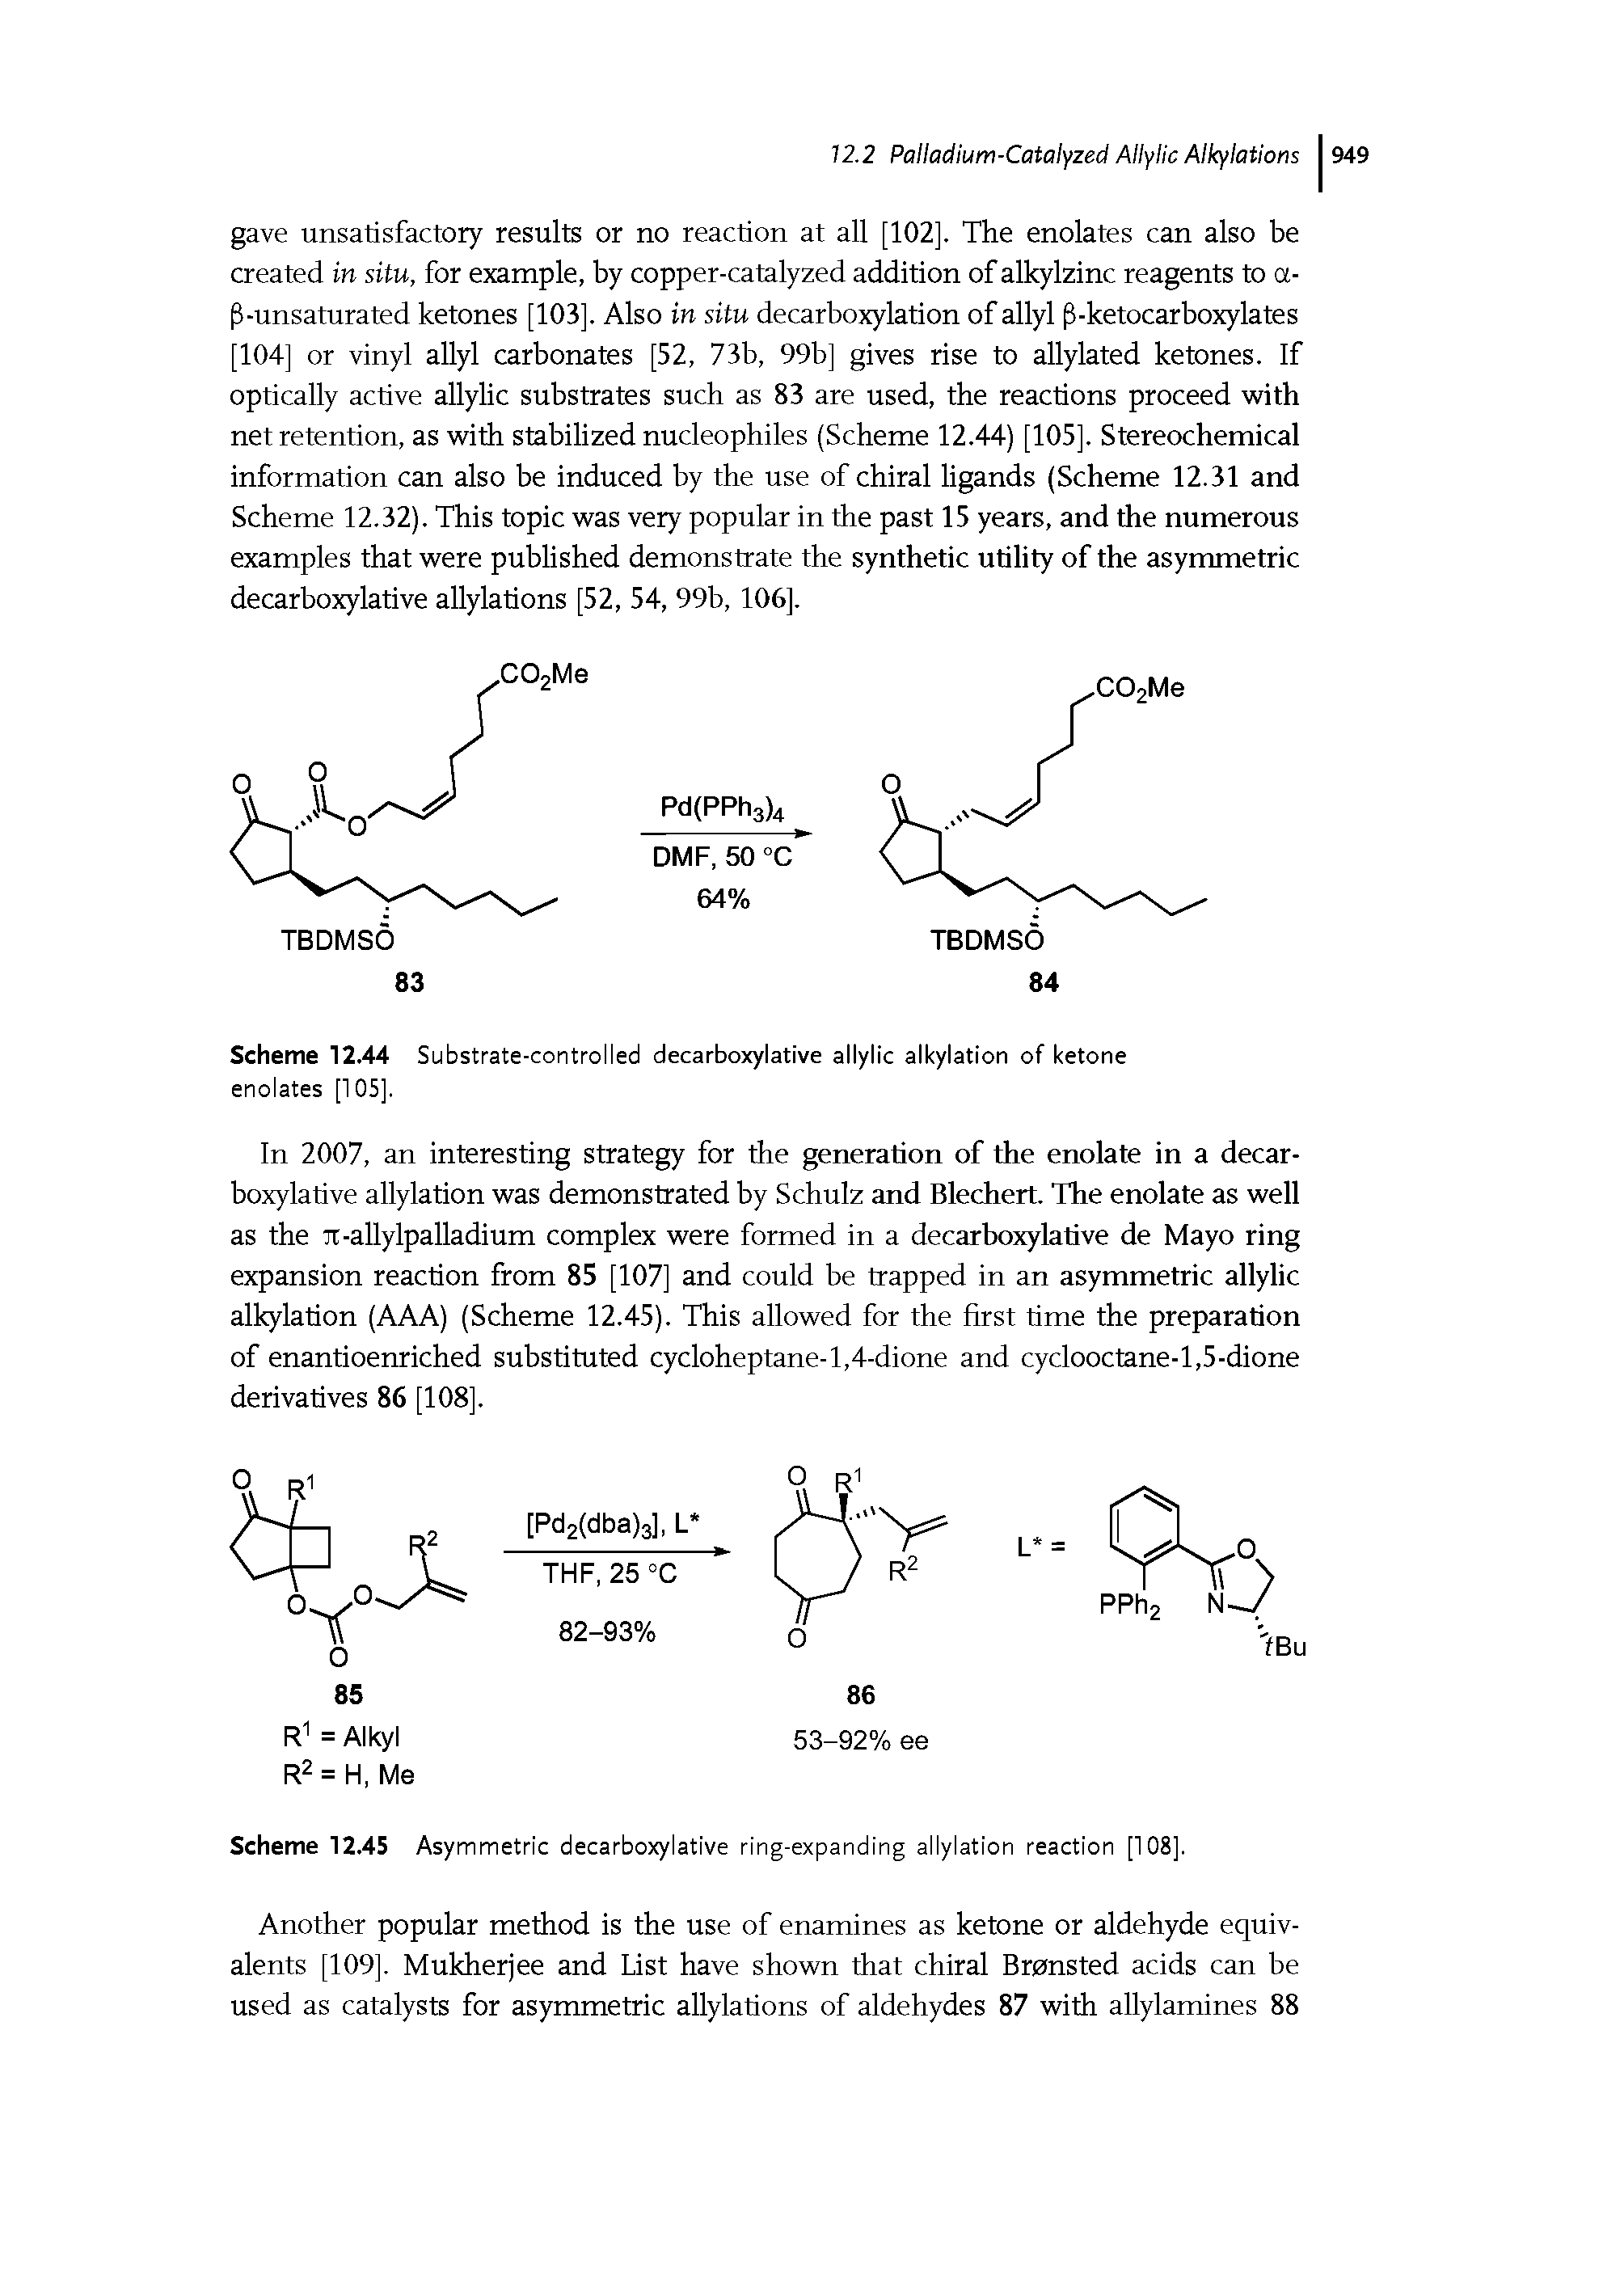 Scheme 12.45 Asymmetric decarboxylative ring-expanding allylation reaction [108].